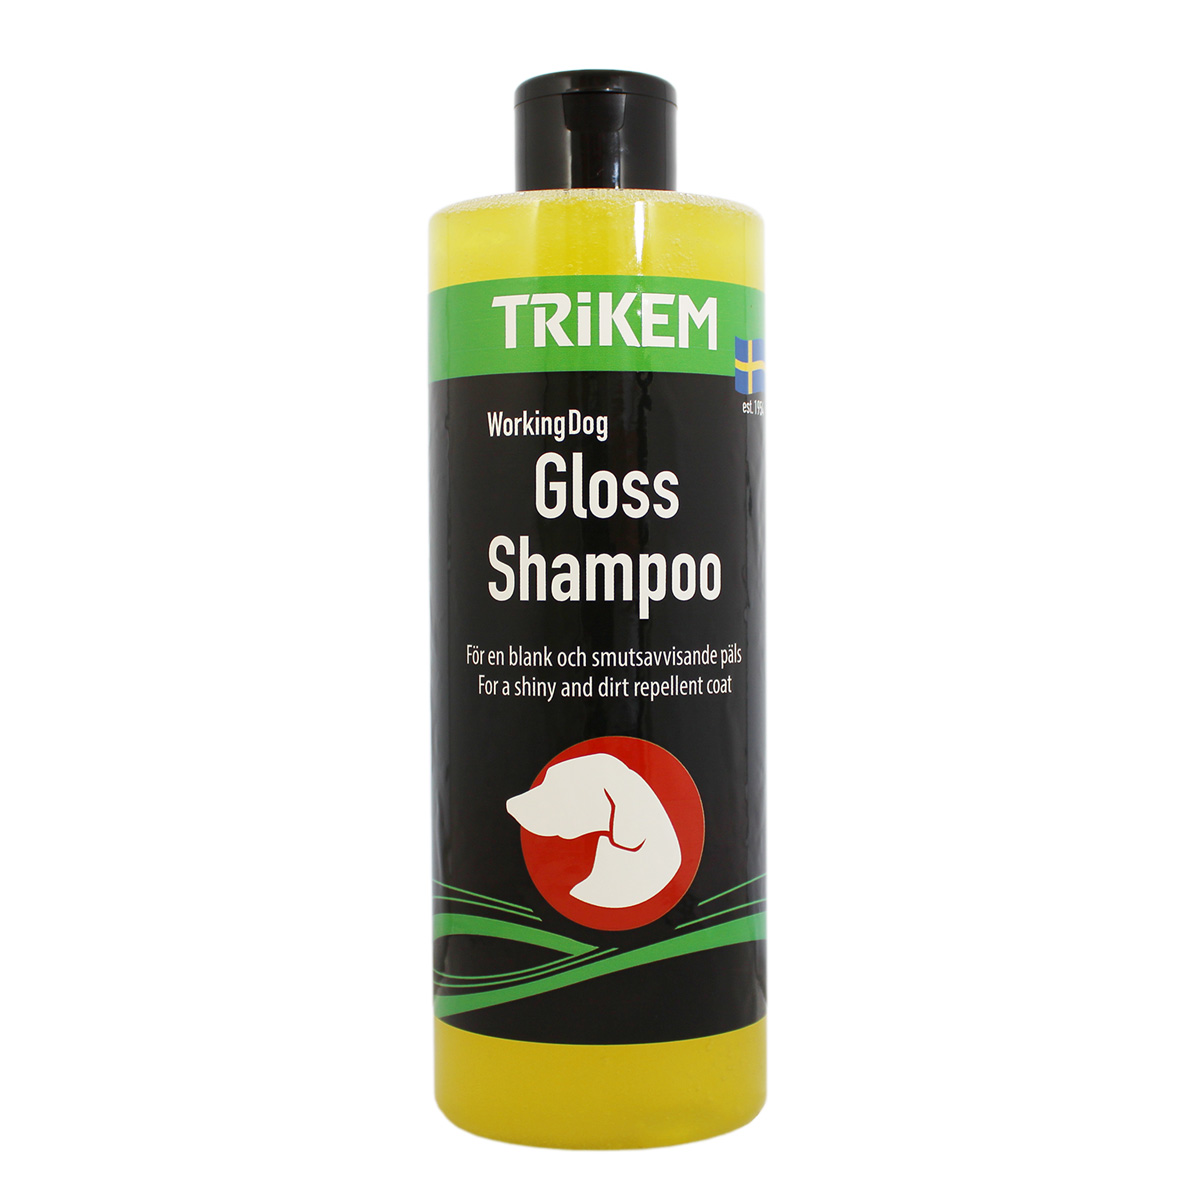 Trikem Working Dog Gloss Shampoo 500ml